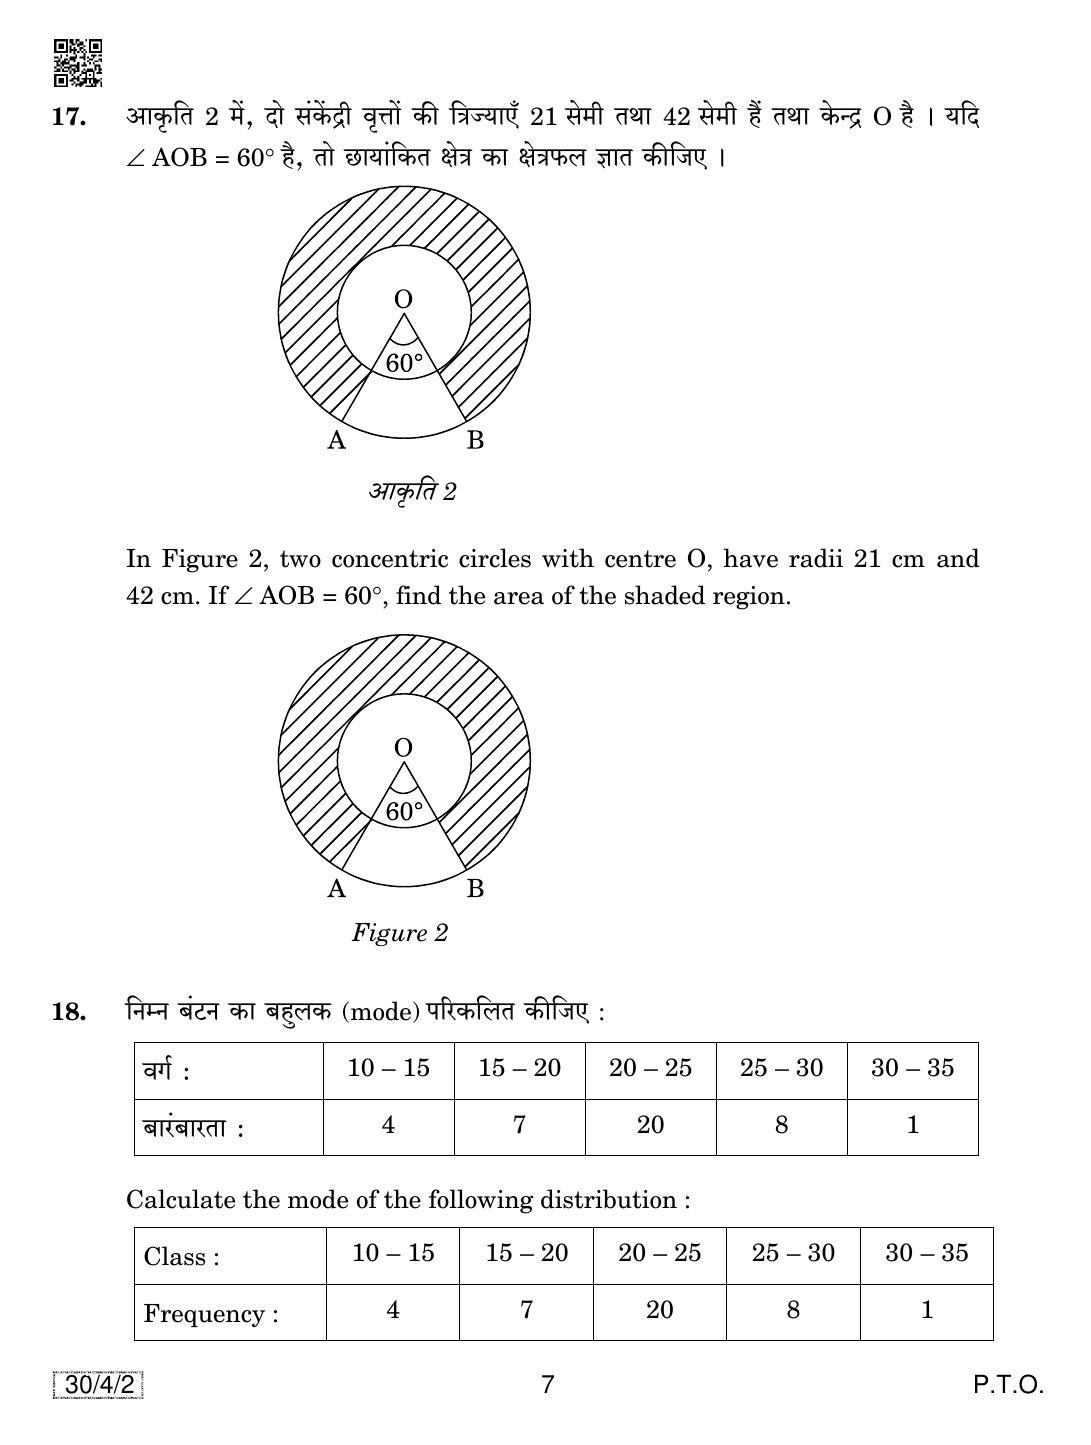 CBSE Class 10 Maths (30/4/2 - SET 2) 2019 Question Paper - Page 7